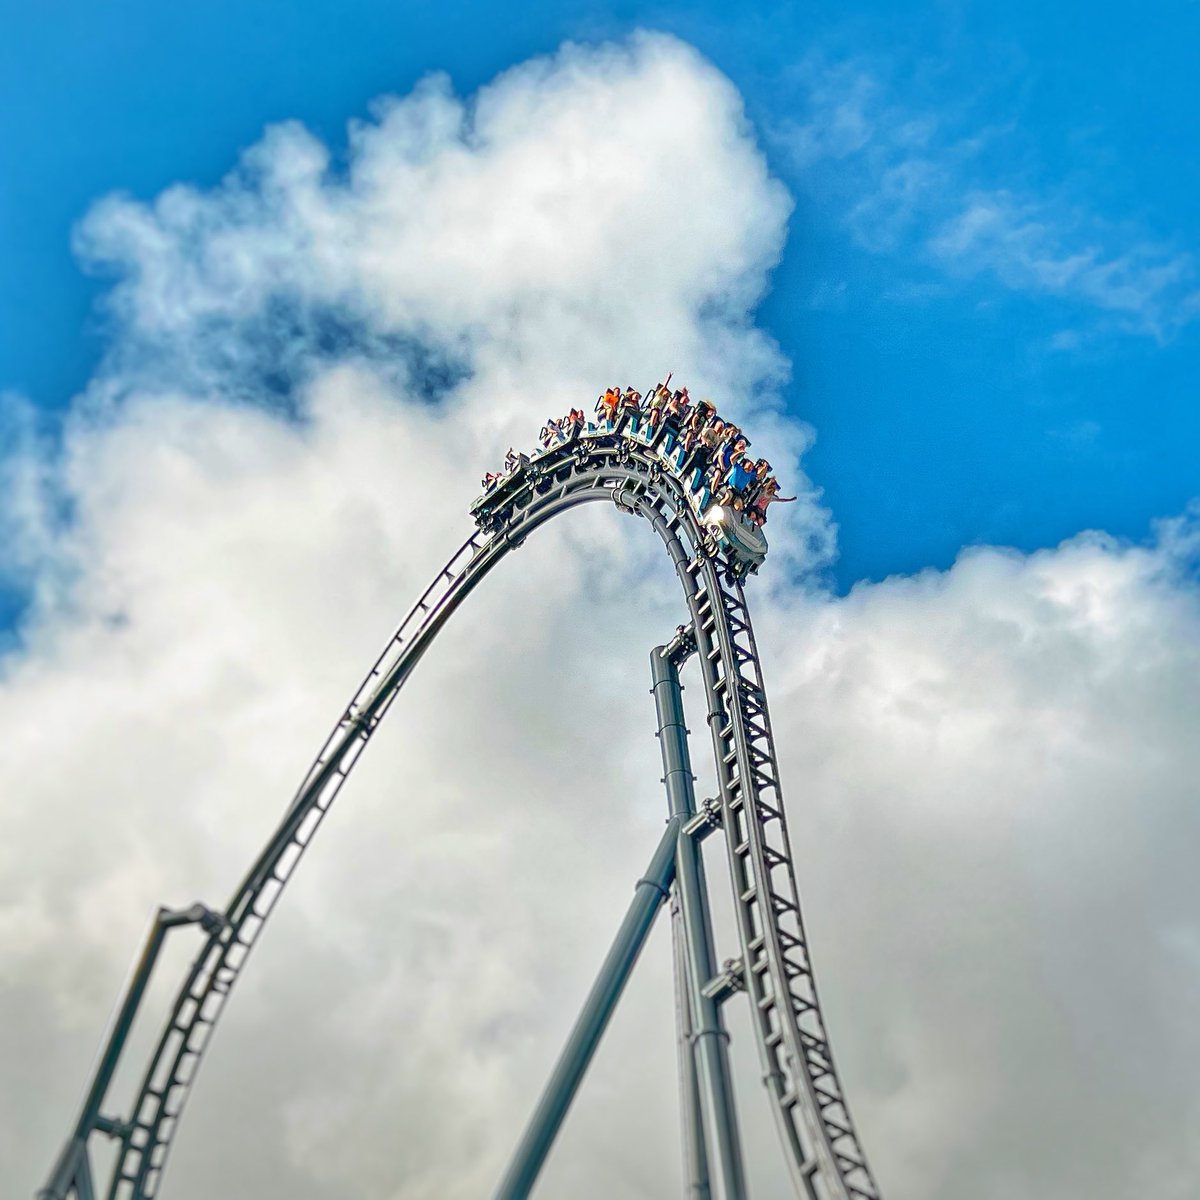 VelociCoaster in the clouds! ⛅️ 

#velocicoaster #intamin #islandsofadventure #universalorlando #universalstudios #florida #themepark #rollercoaster #amusementpark #coasterenthusiast #thrillride #explorepage #travel #photography